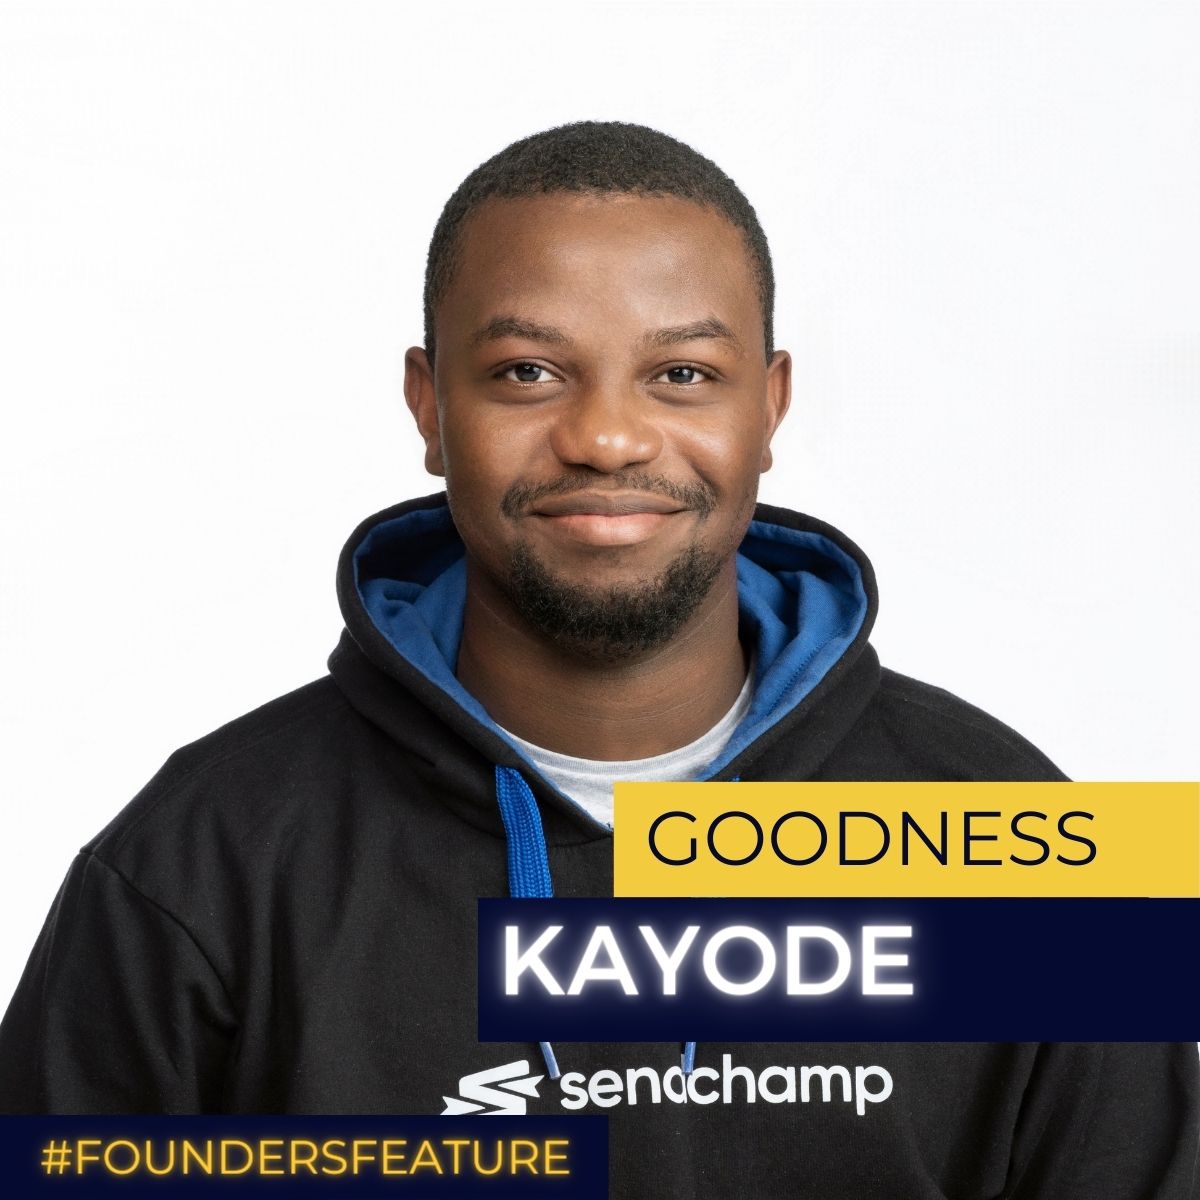 Goodness Kayode Founder of Sendchamp